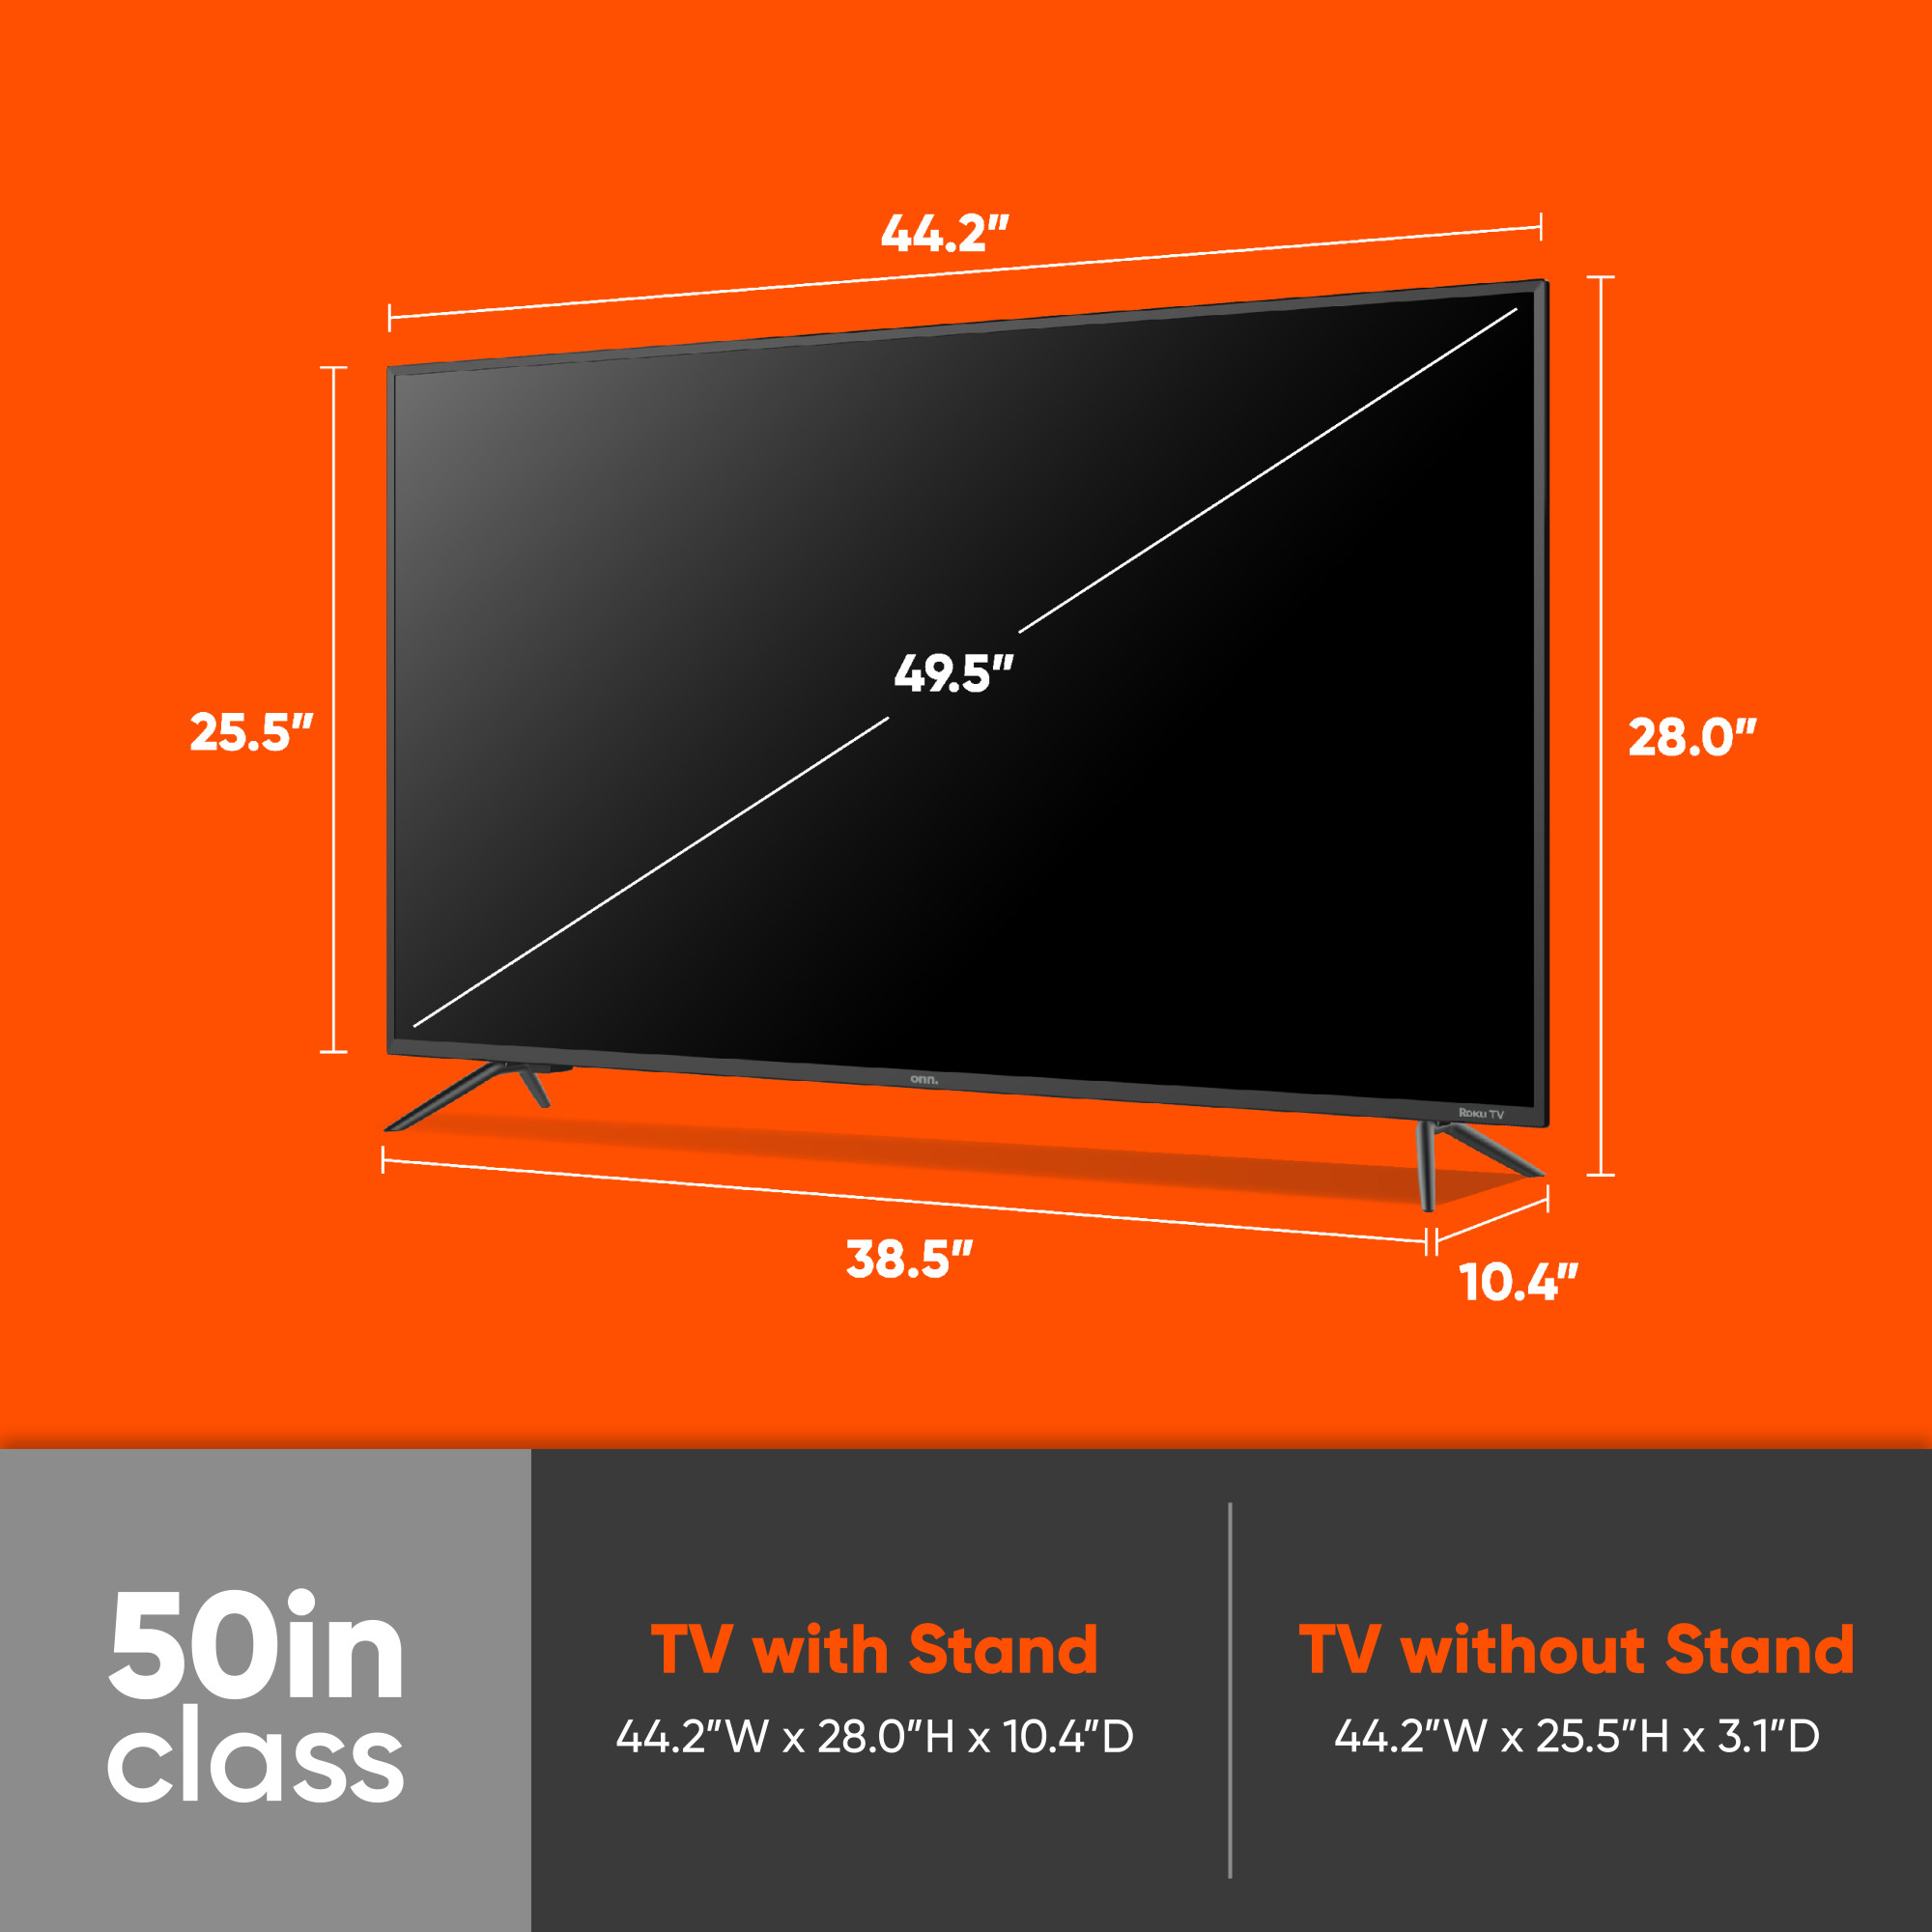 onn. 50” Class 4K UHD LED Roku Smart TV HDR